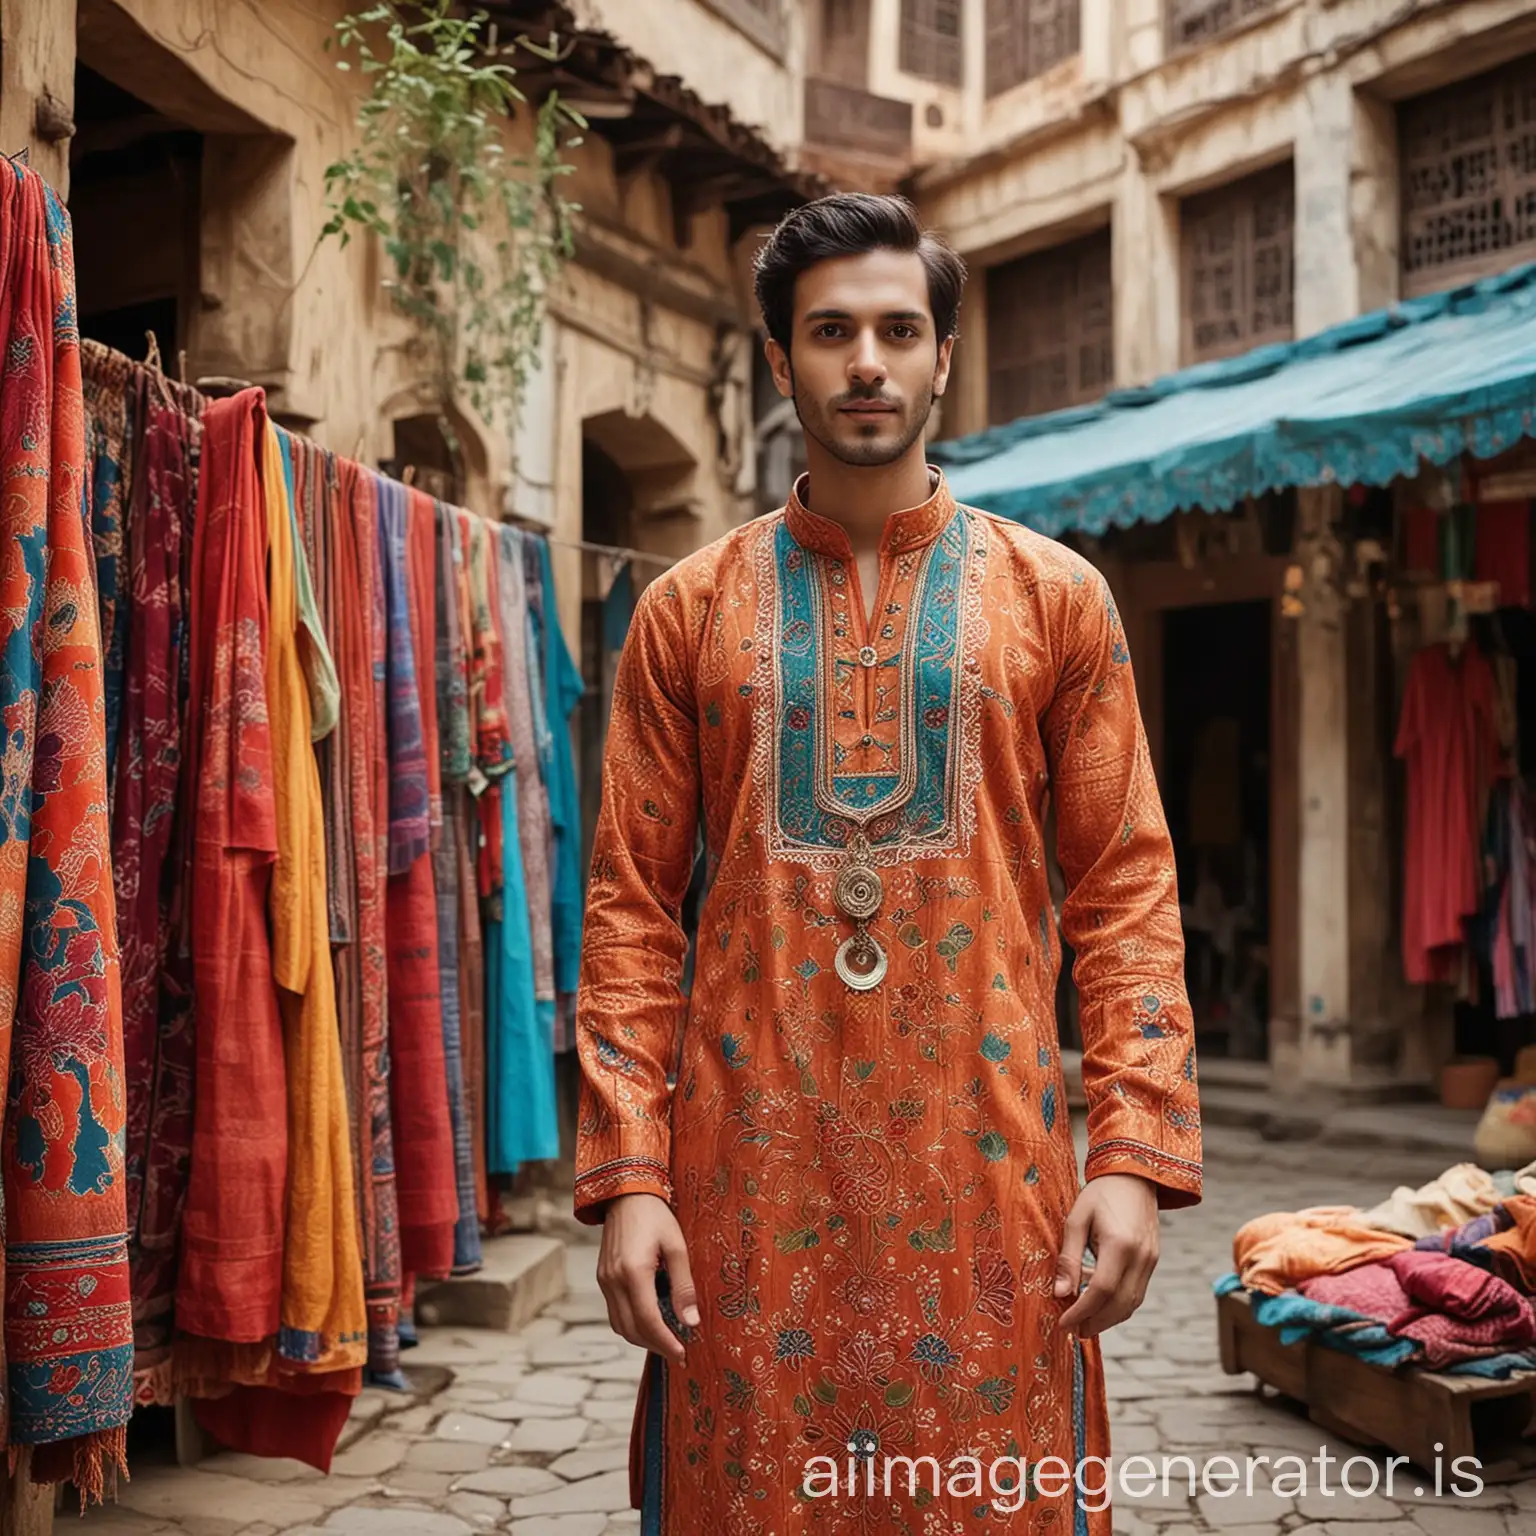 Man-in-Vibrant-Indian-Kurta-Amid-Cultural-Market-Scene